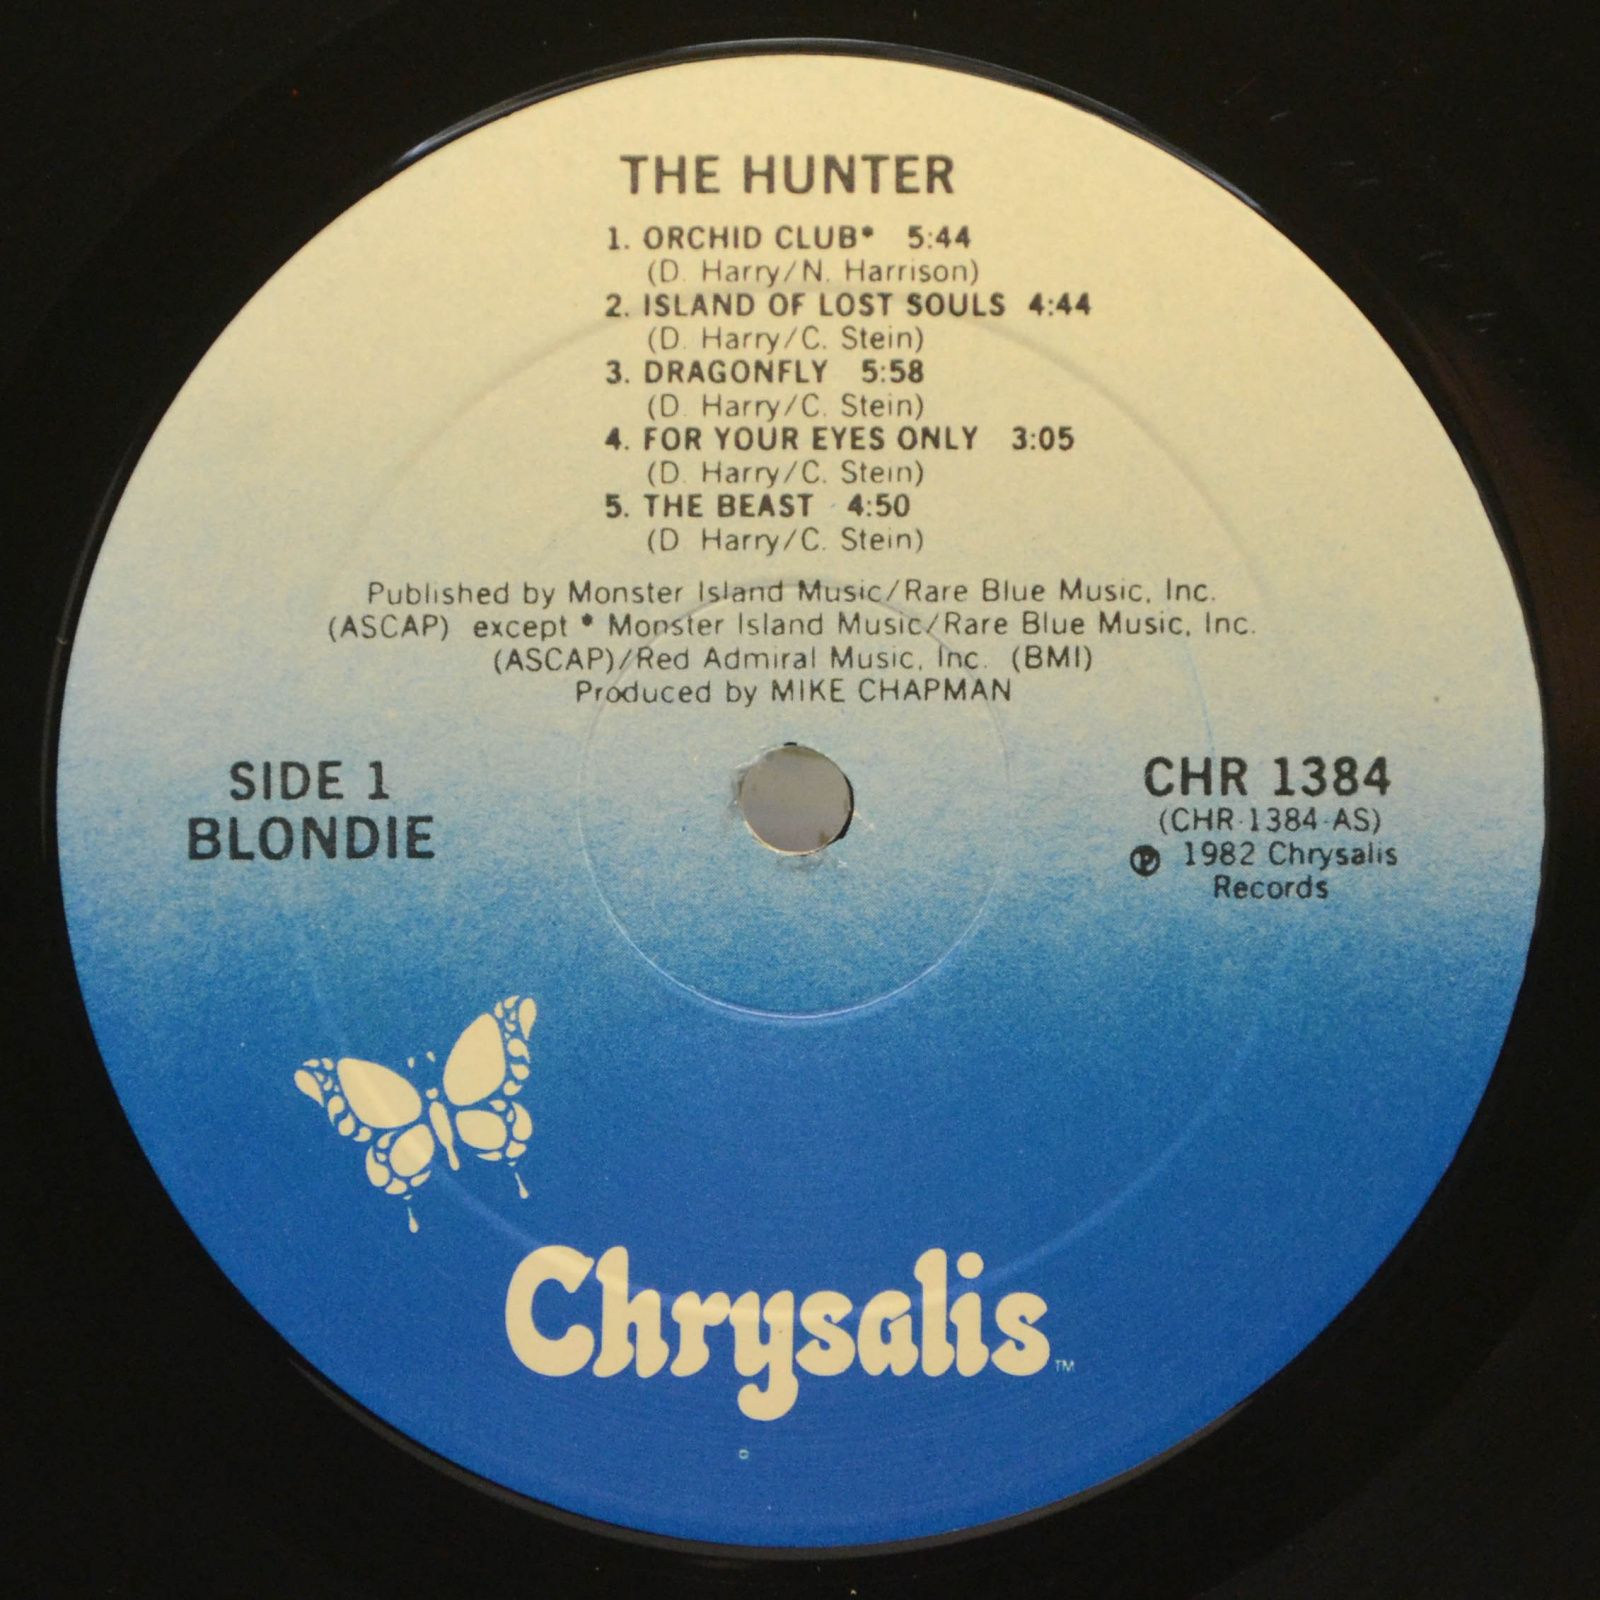 Blondie — The Hunter, 1982